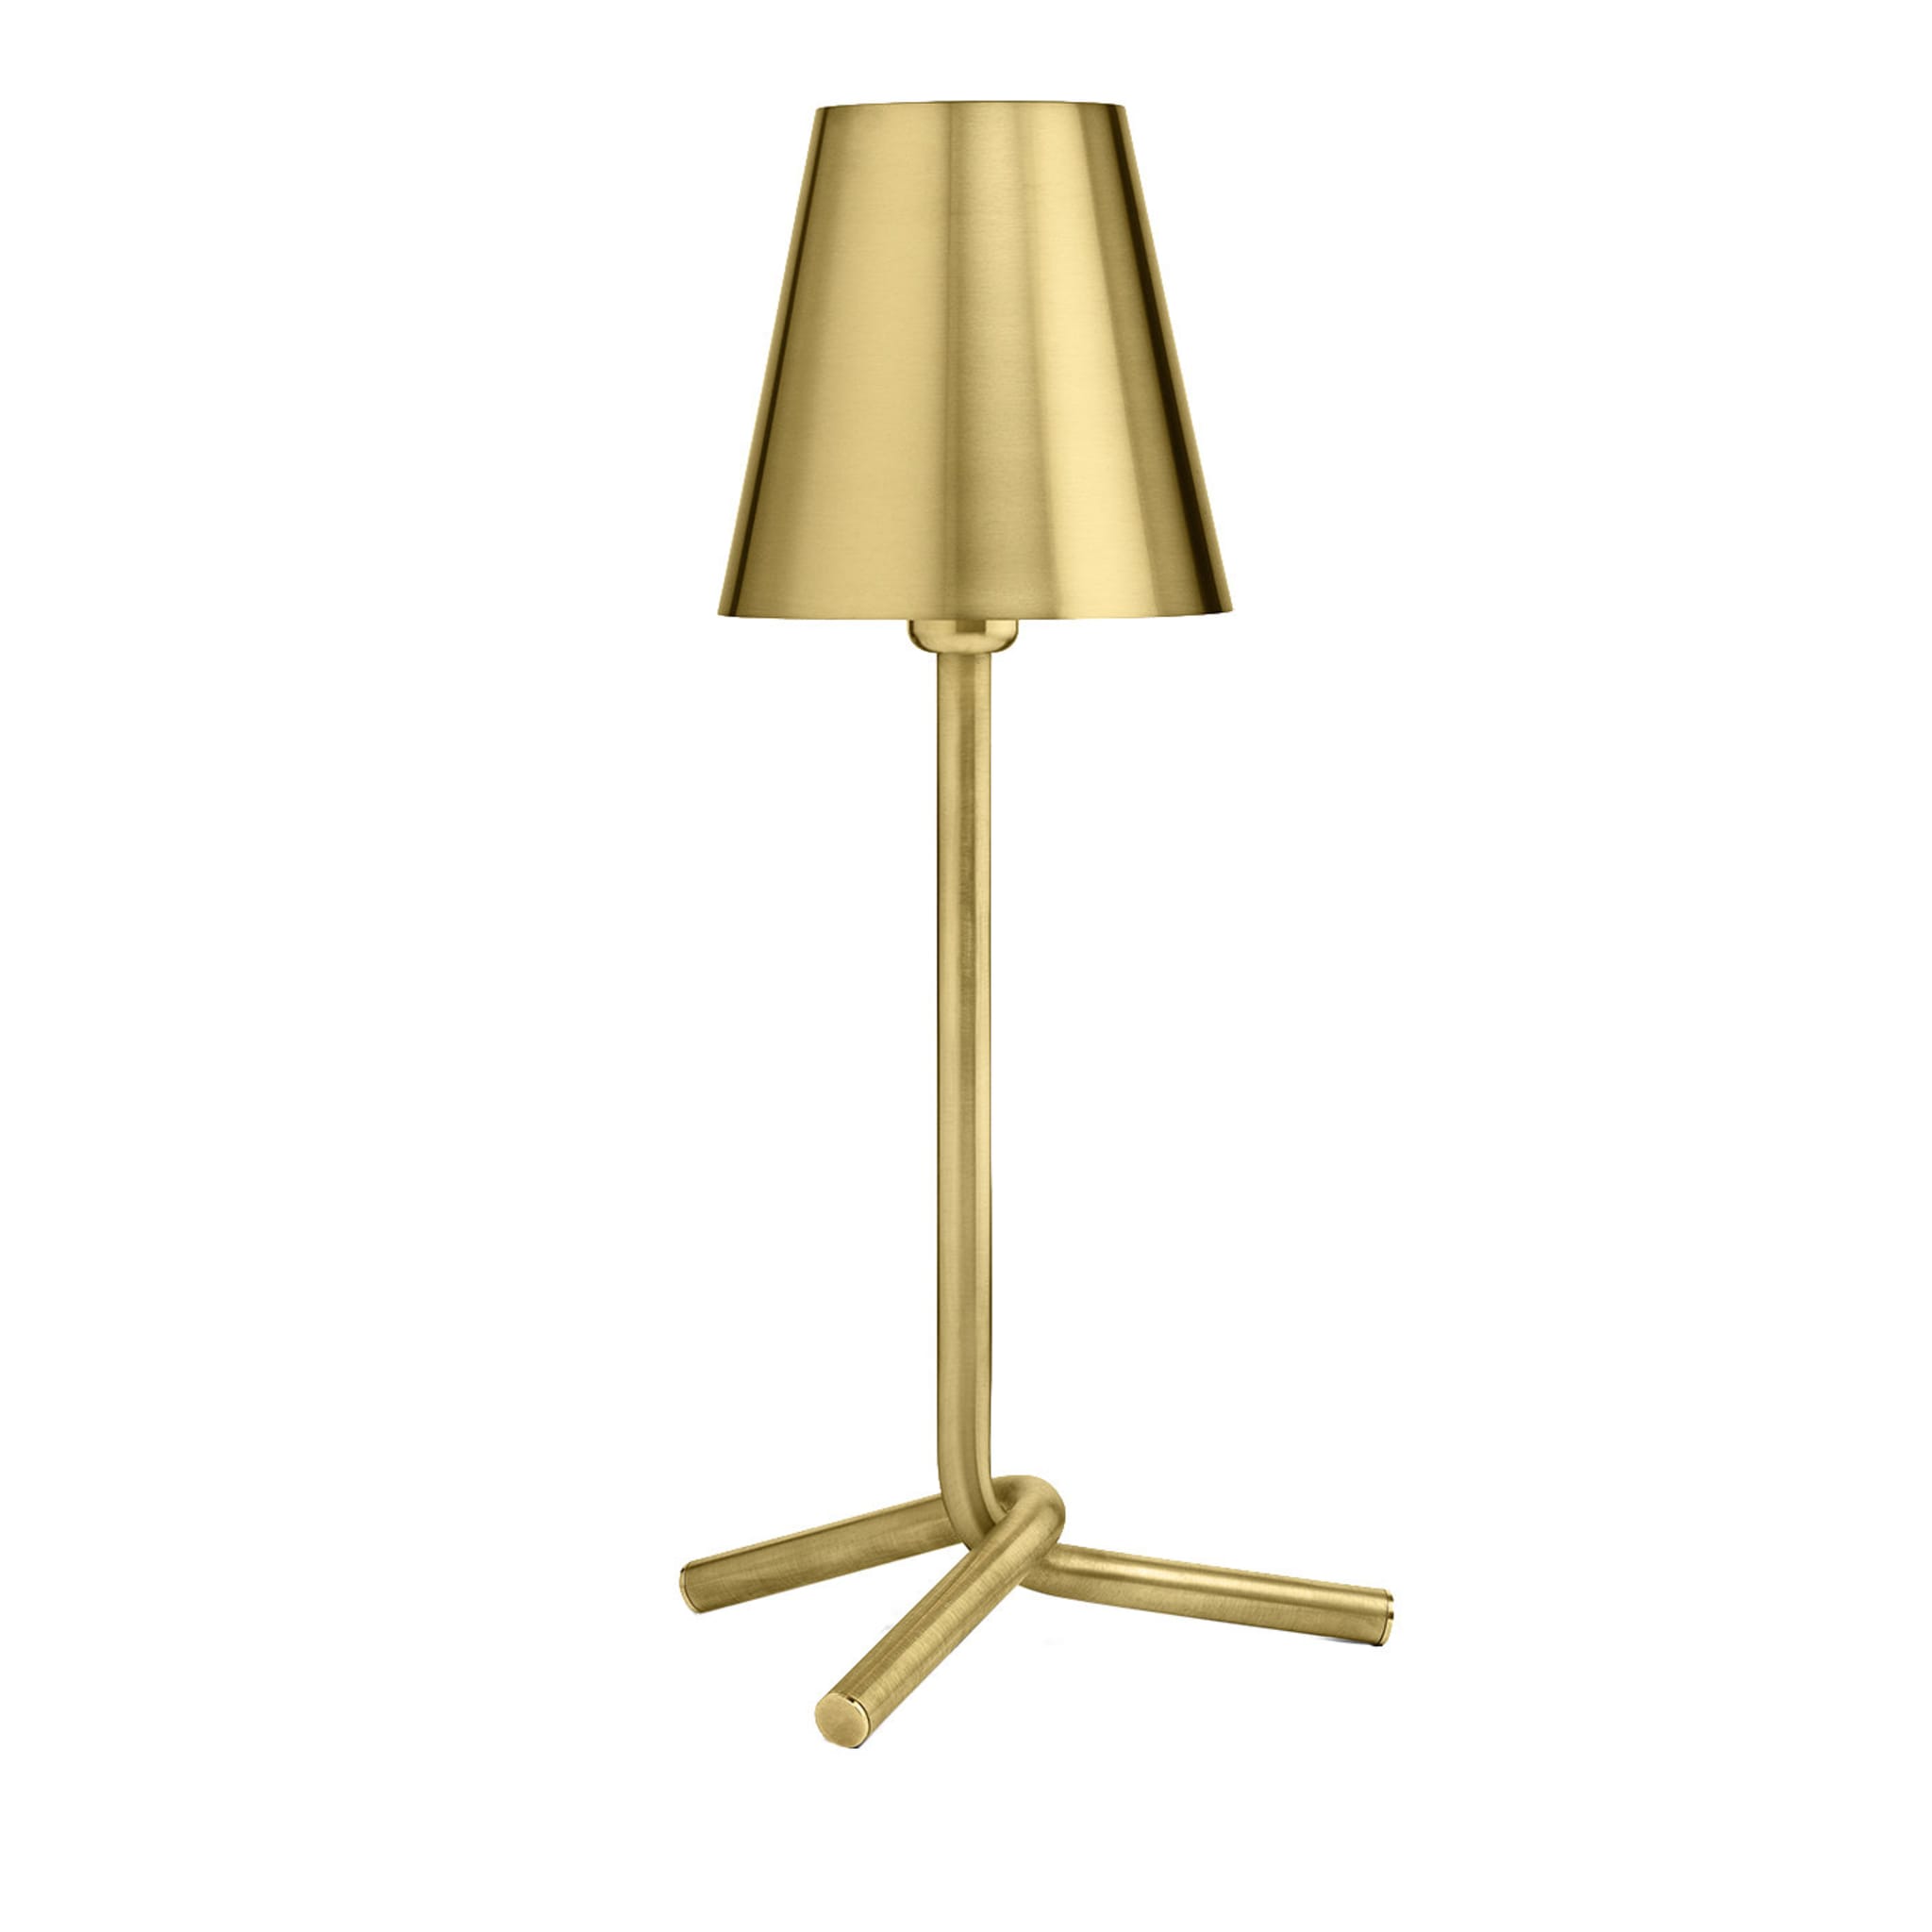 Mio Table Lamp in Satin Brass By Aldo Cibic - Main view